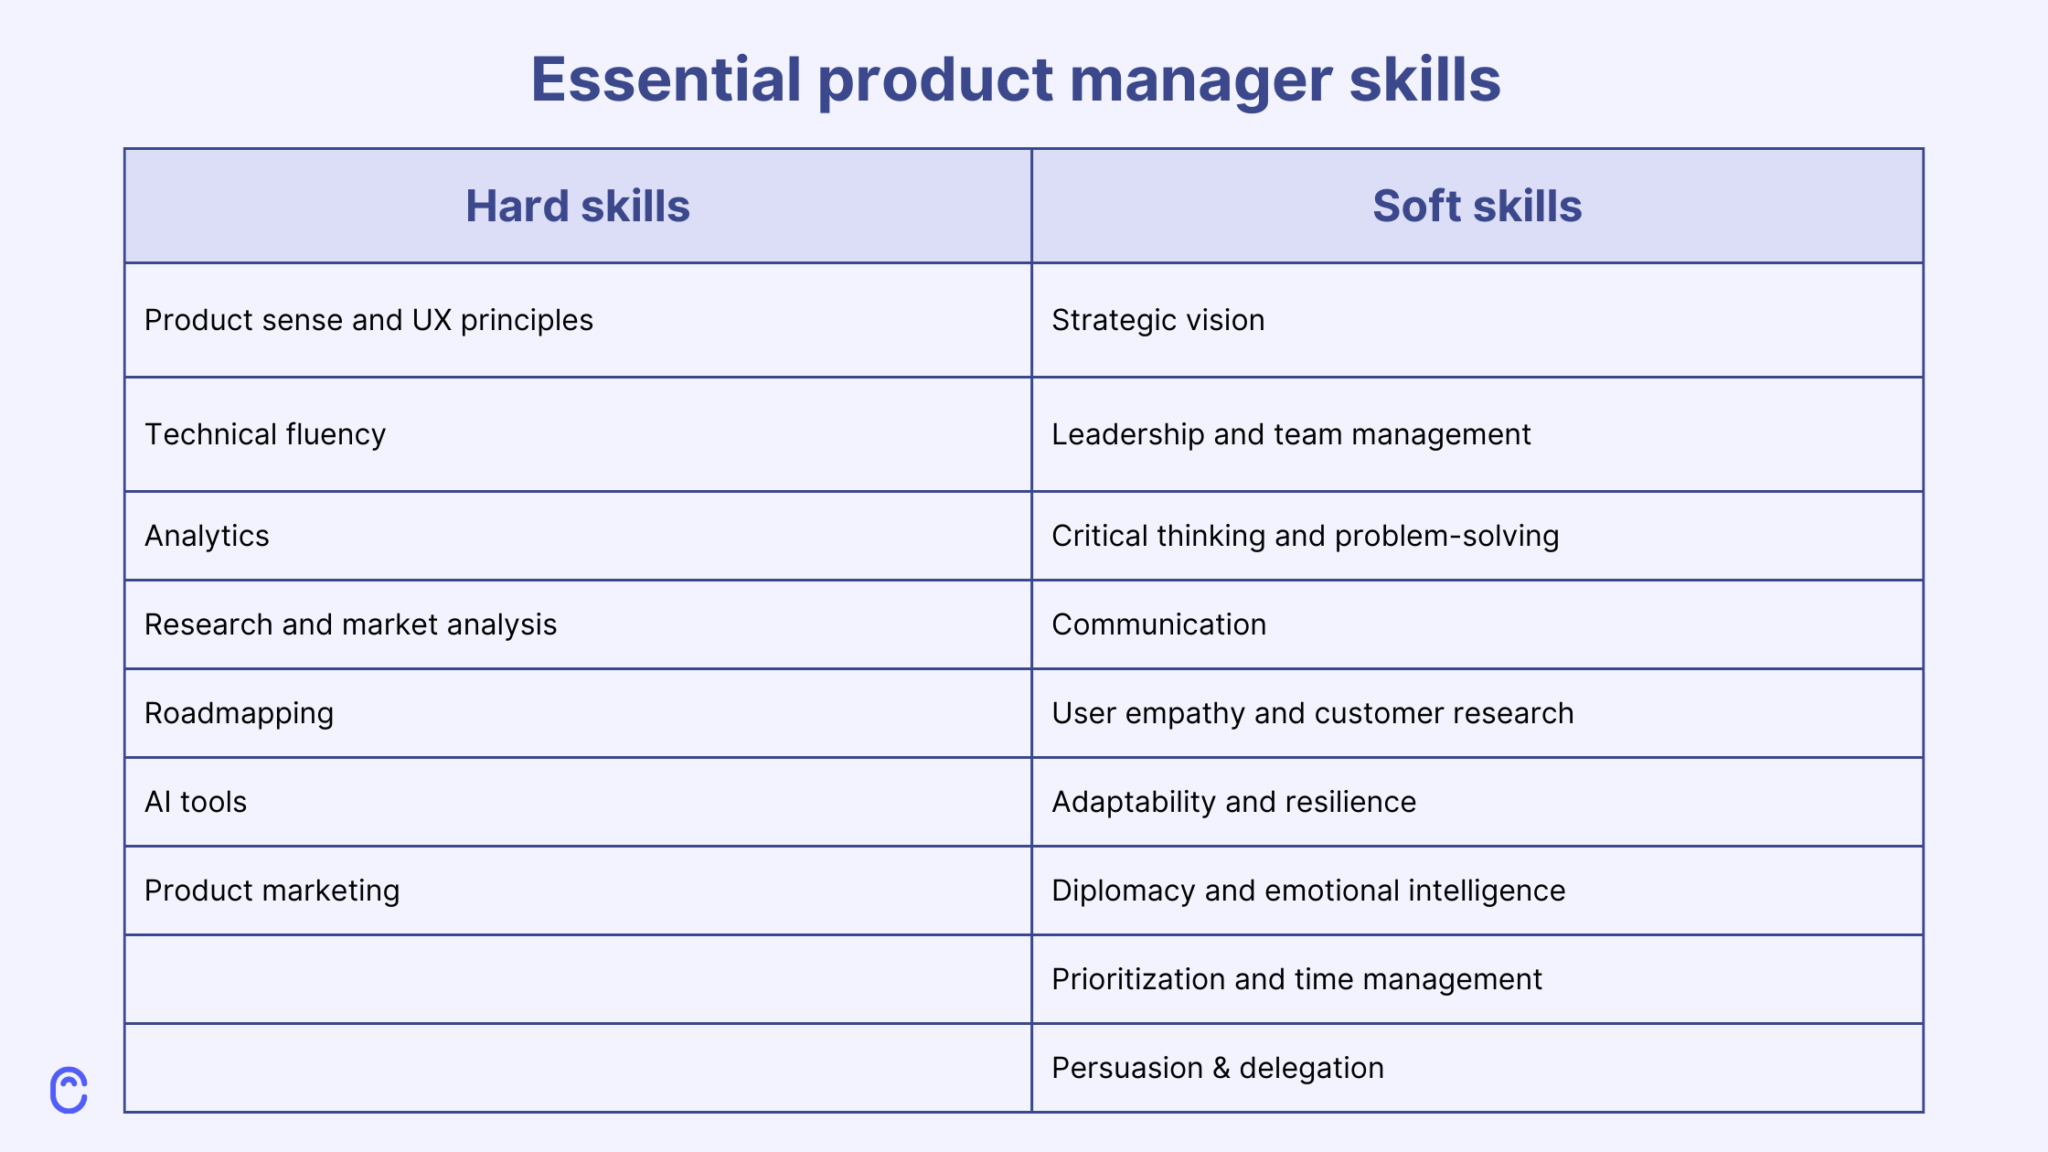 Essential product management skills